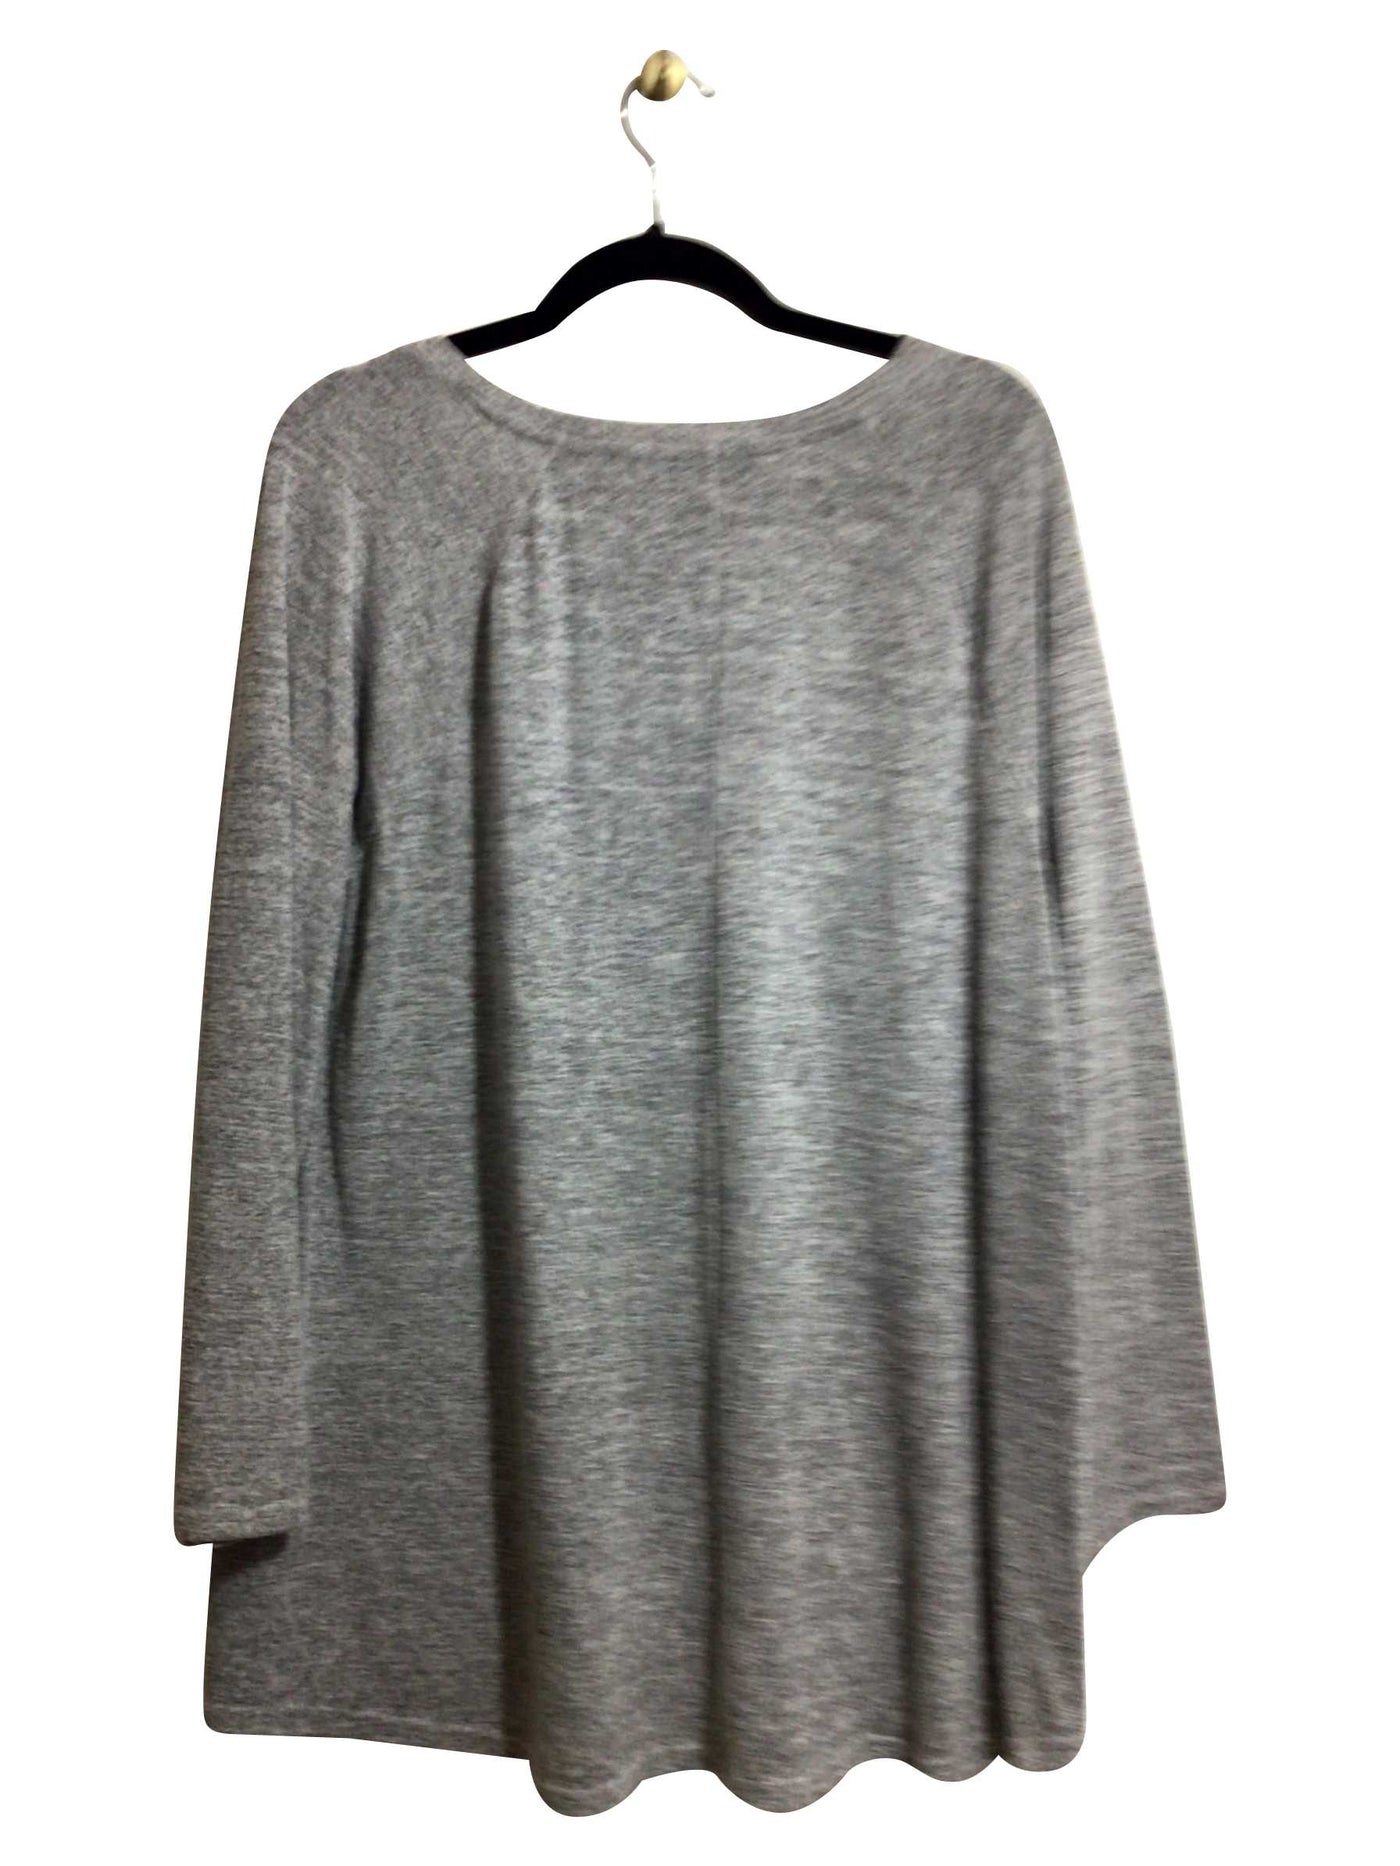 GEORGE Regular fit T-shirt in Gray - Size 1X | 13.25 $ KOOP